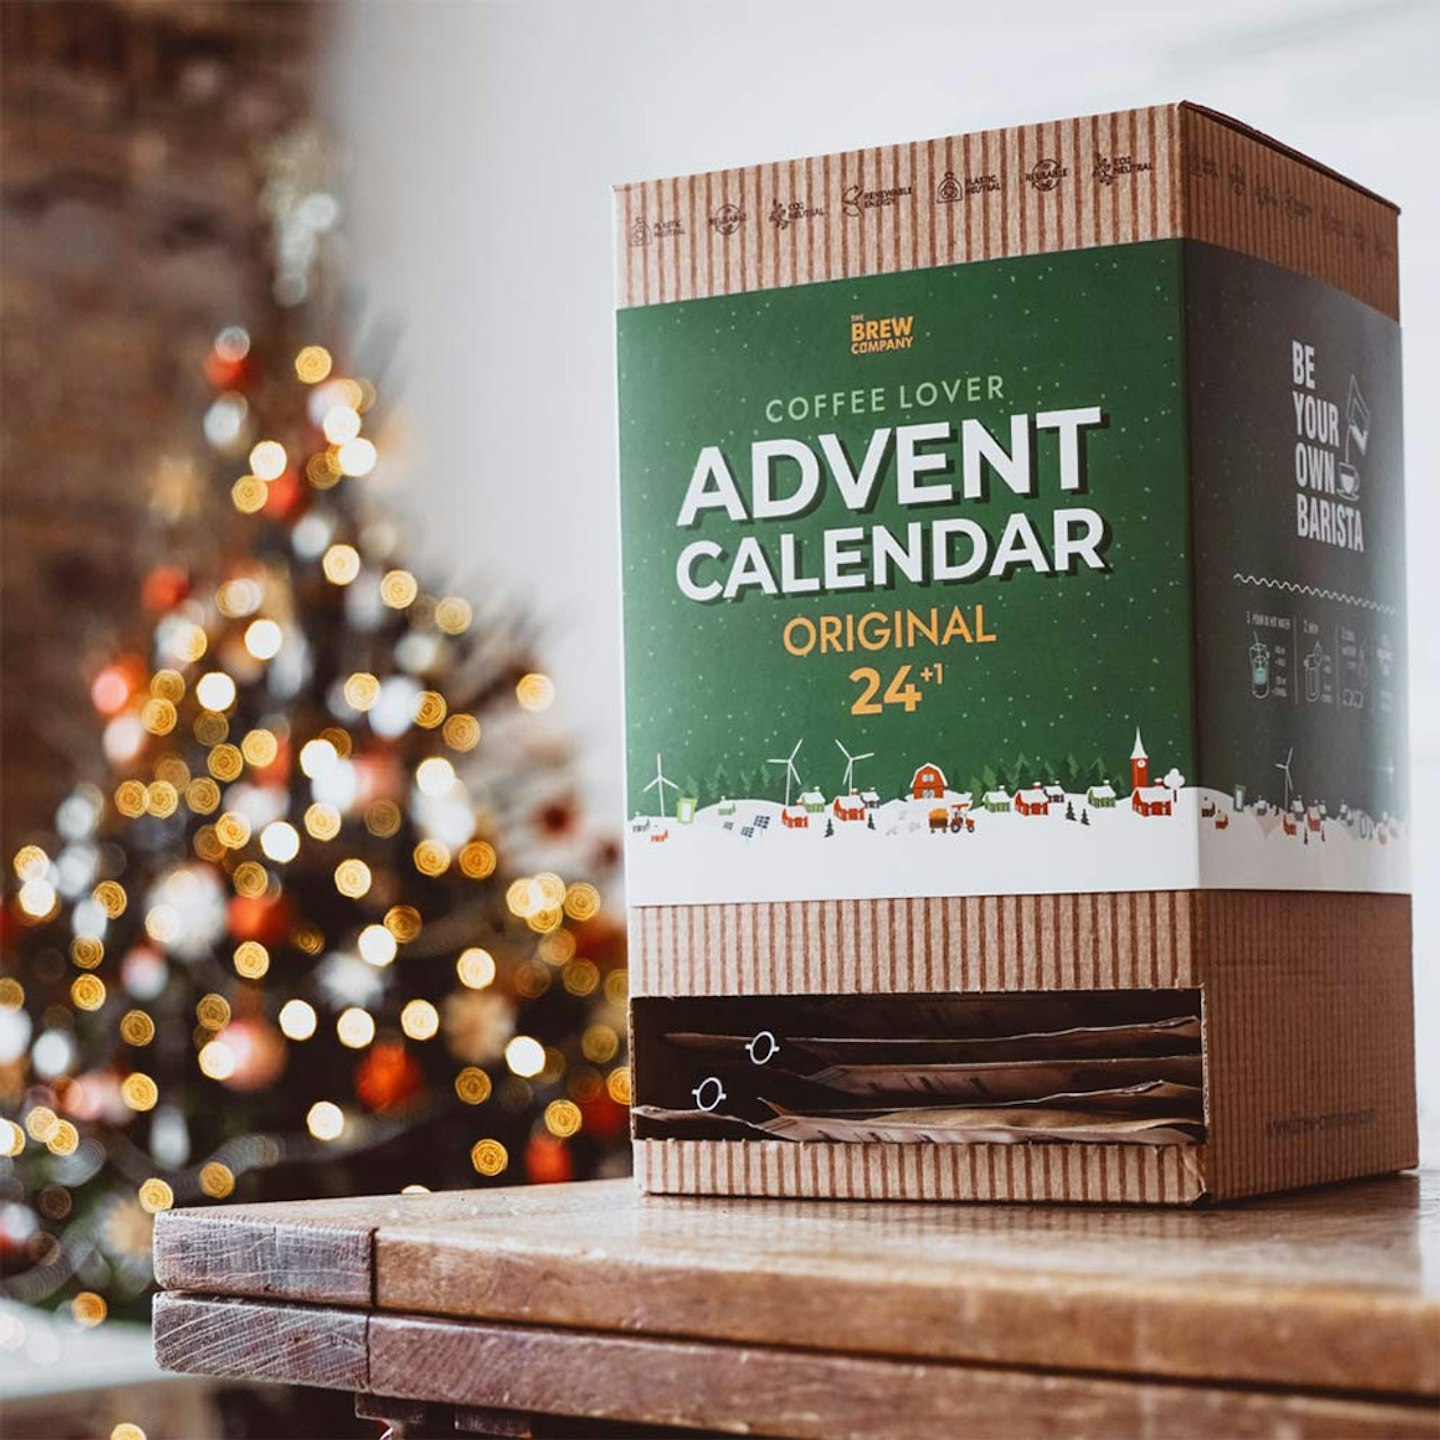 The Brew Company - Adult advent calendars